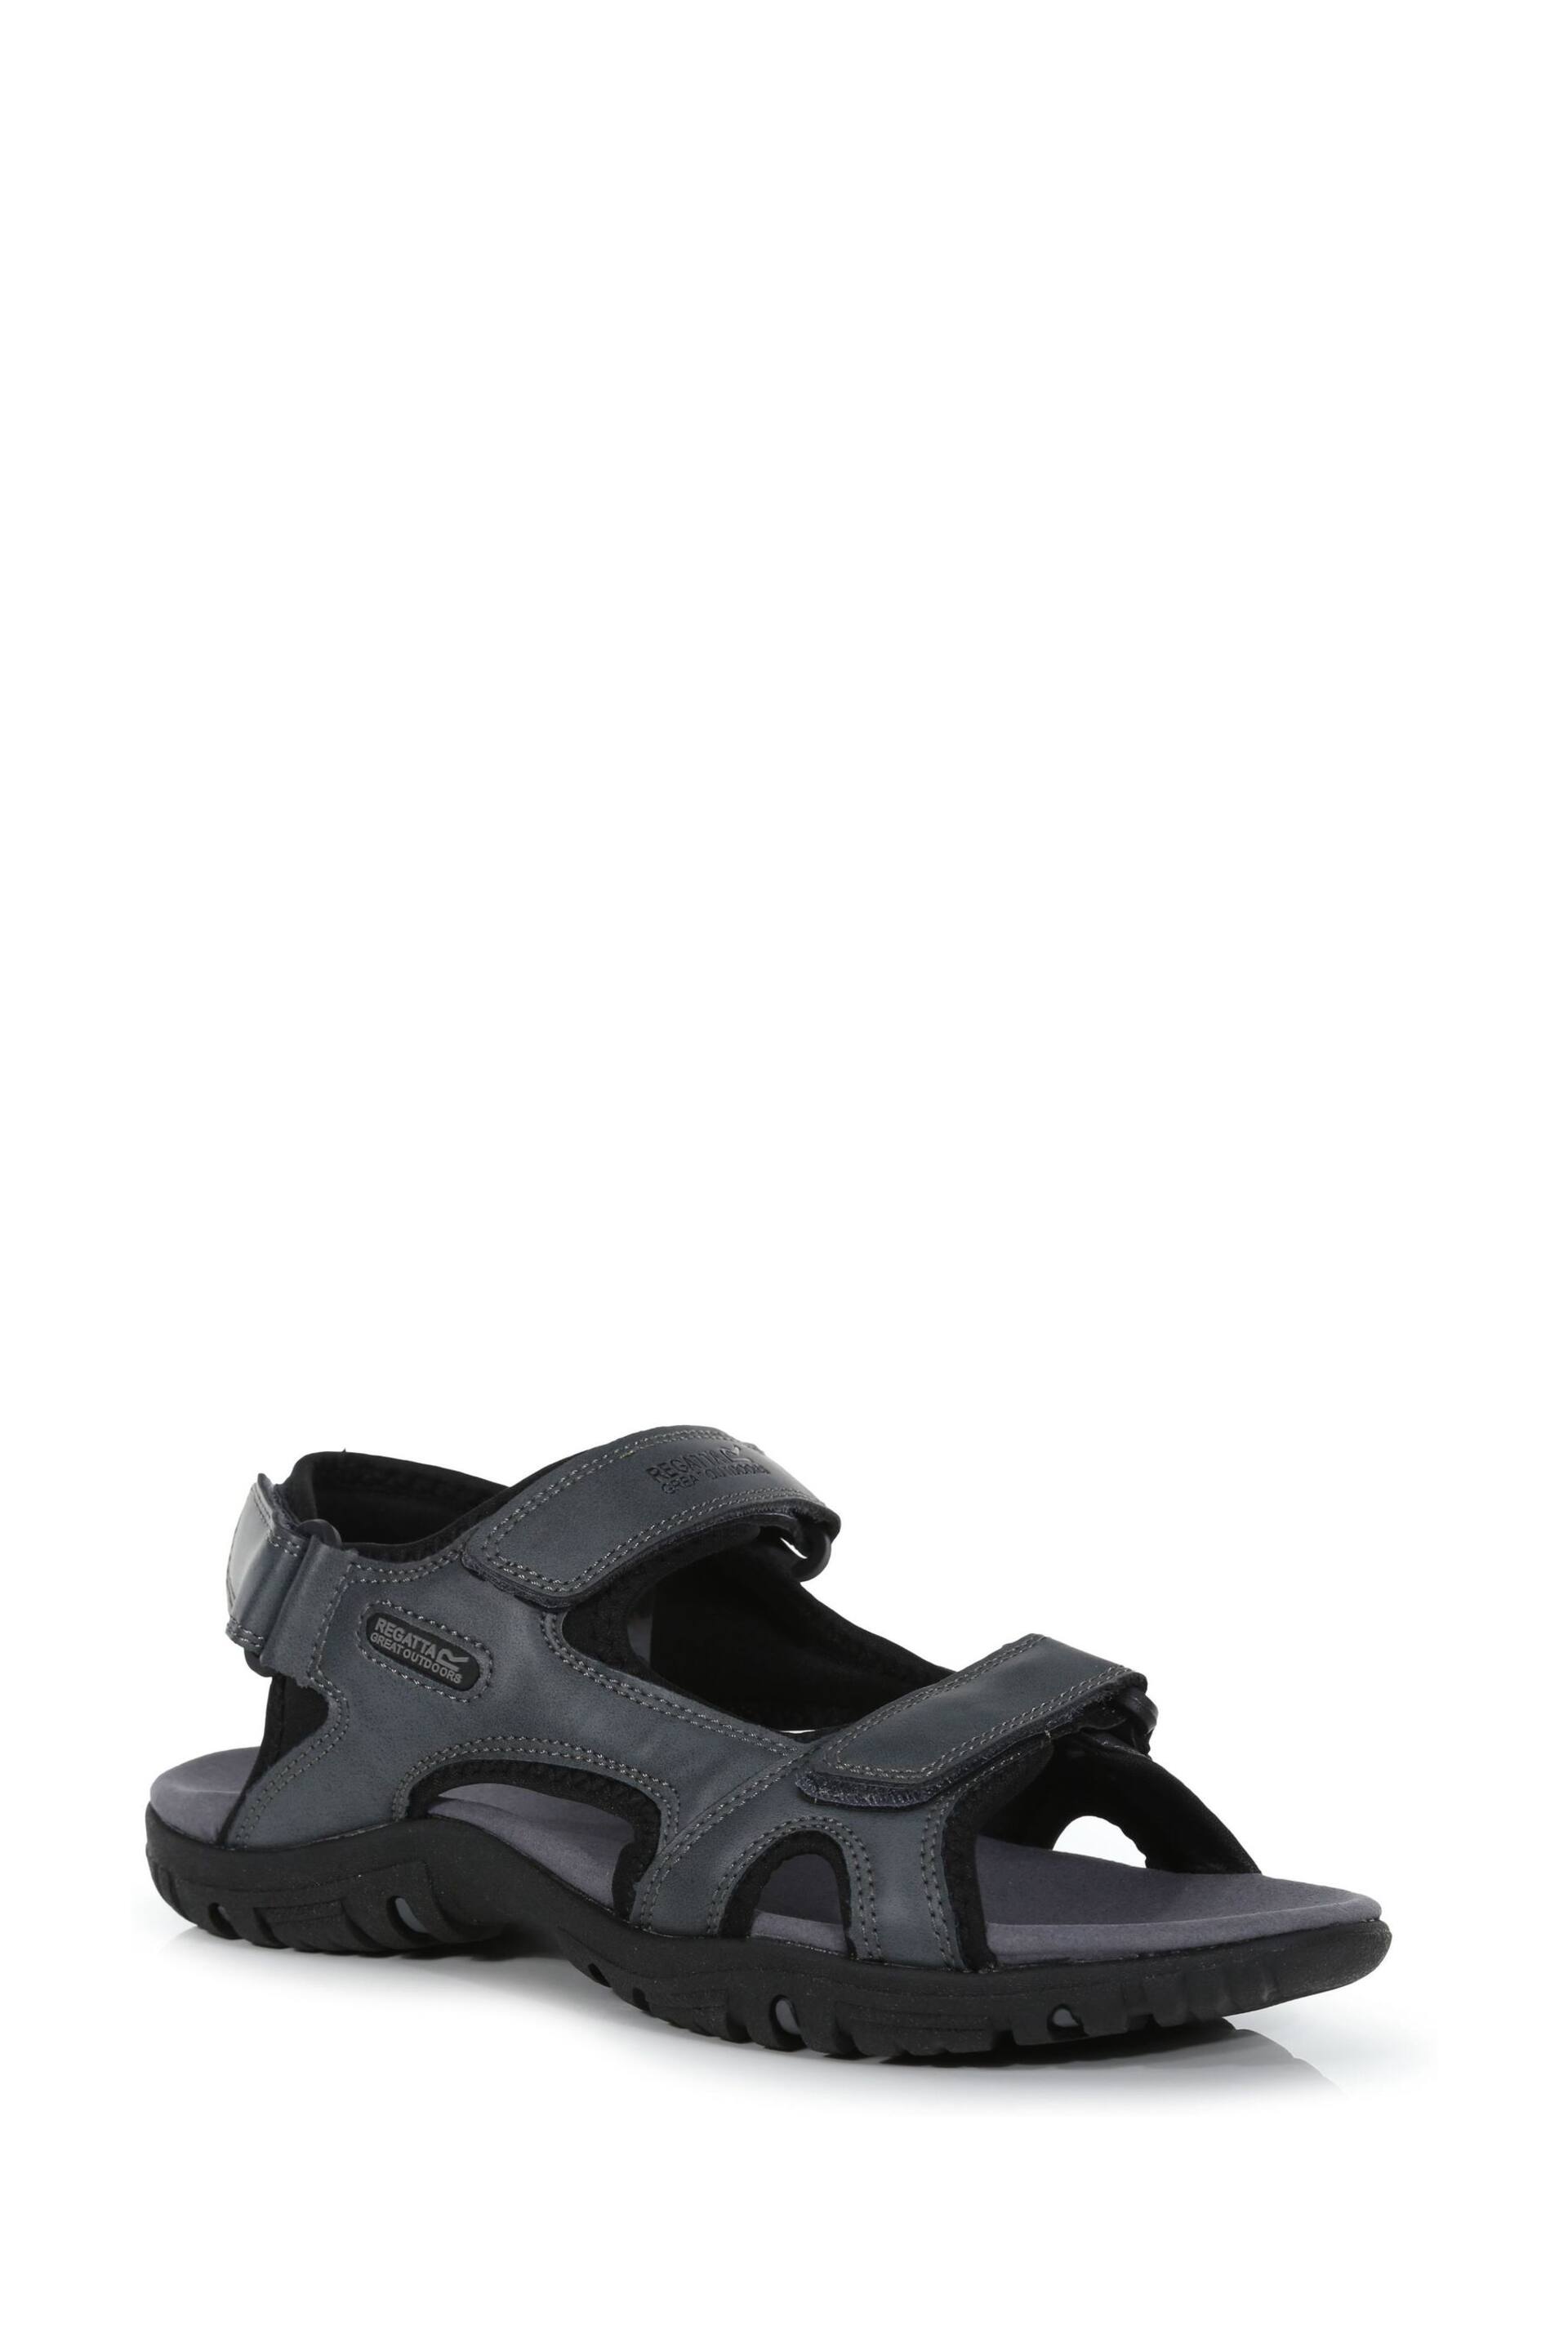 Regatta Grey Comfort Fit Haris Sandals - Image 3 of 6